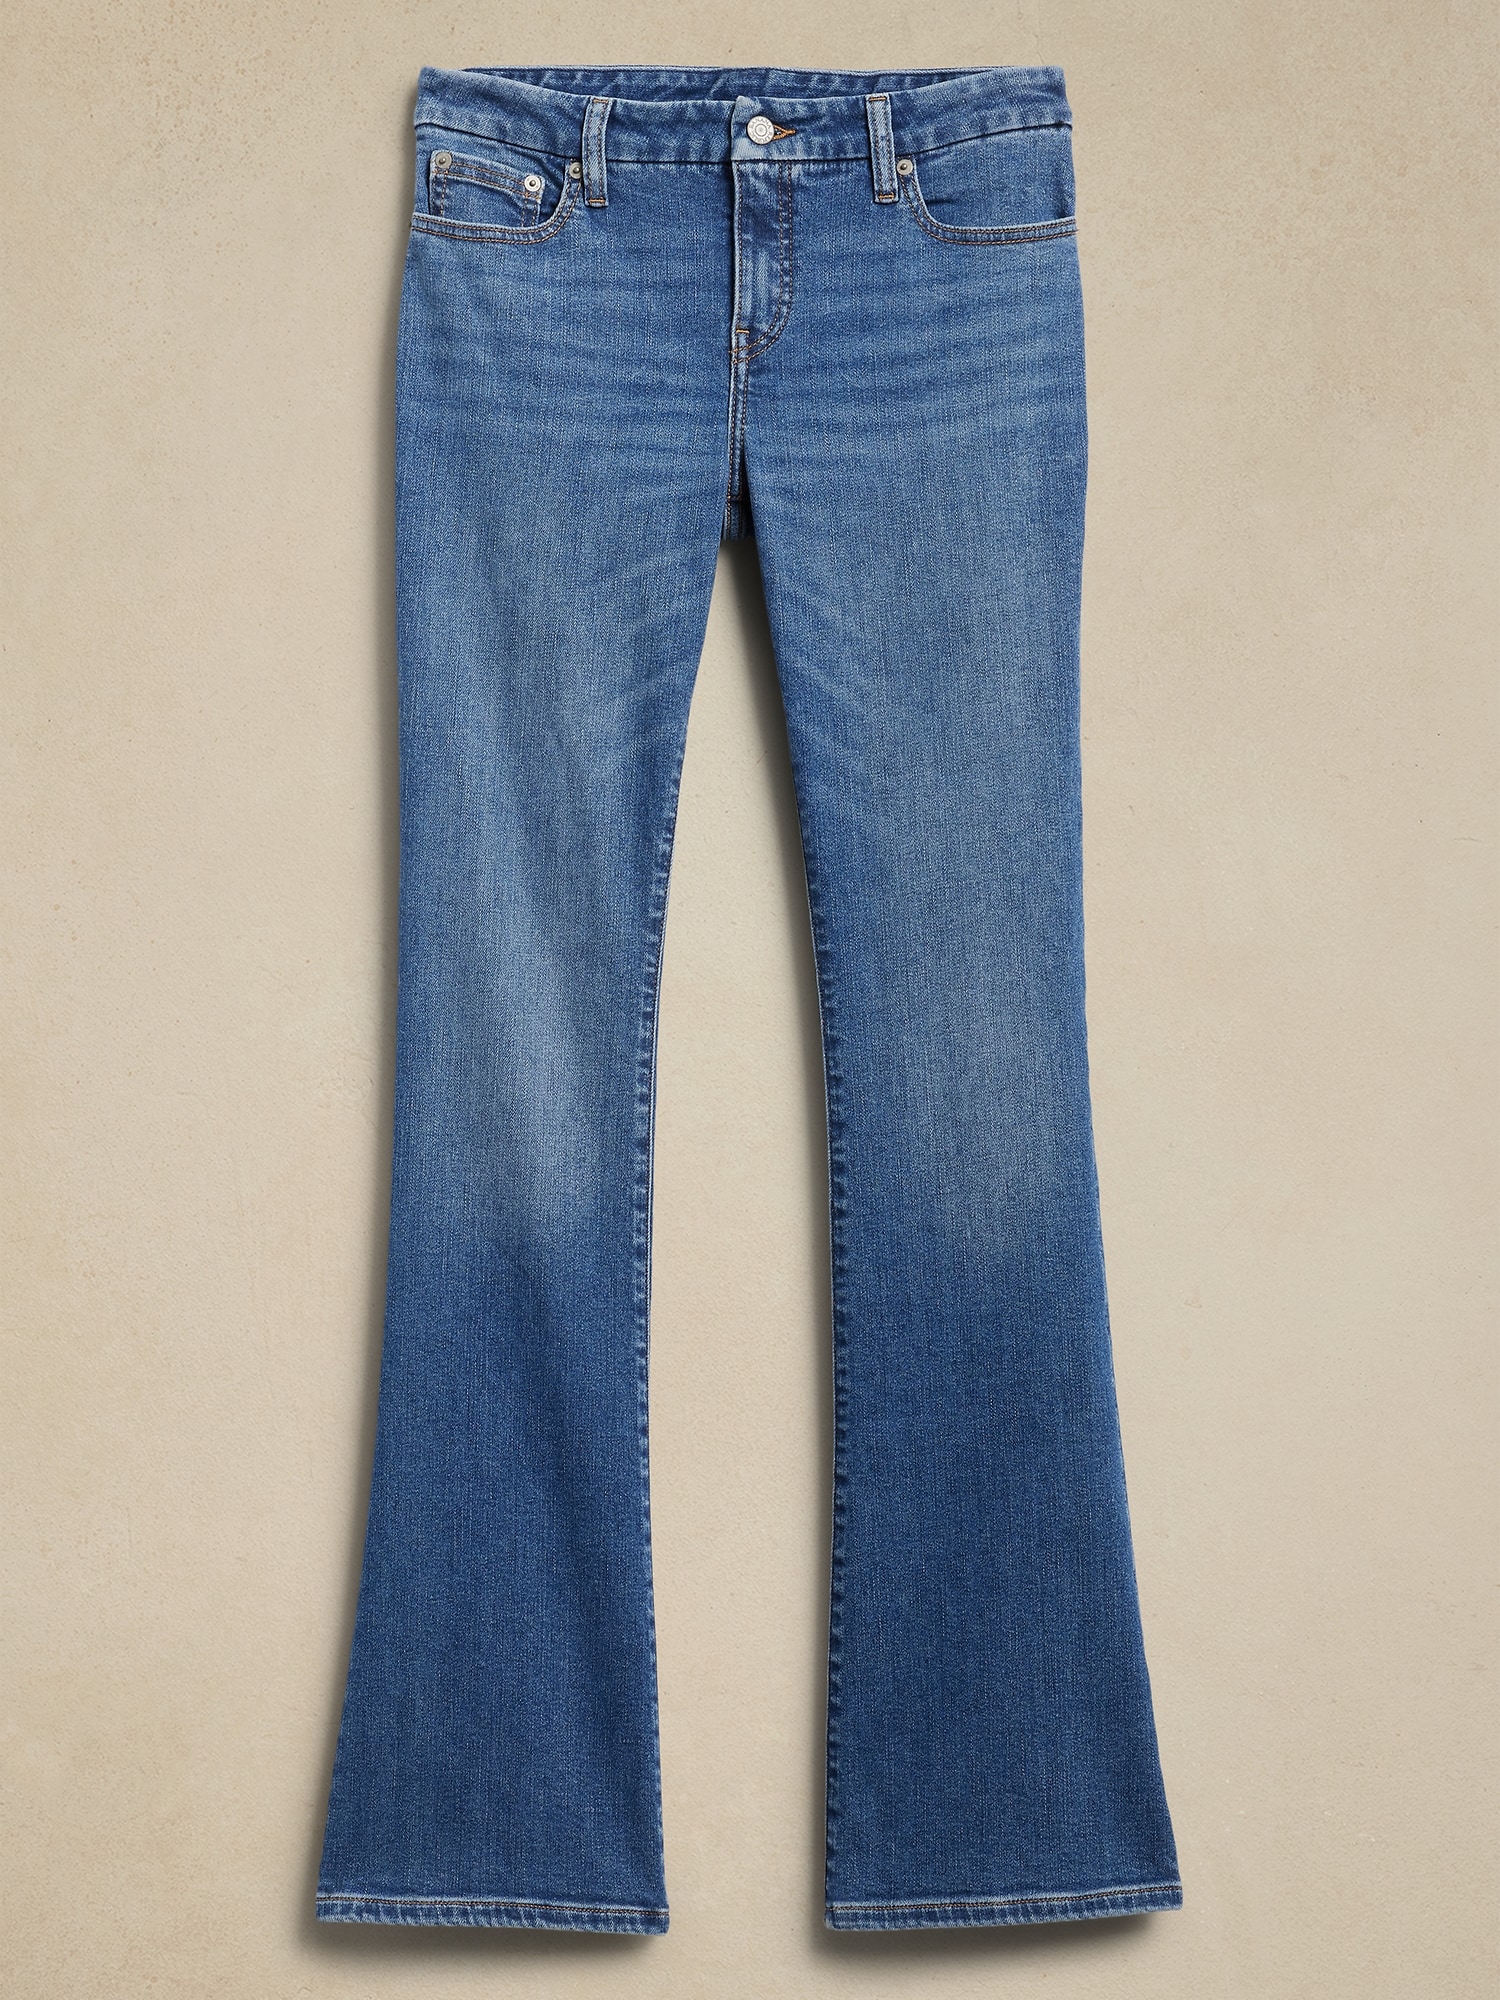 J Brand Banana Republic Women's Shorts Jeans Blue Beige Size 8 26 28 L -  Shop Linda's Stuff